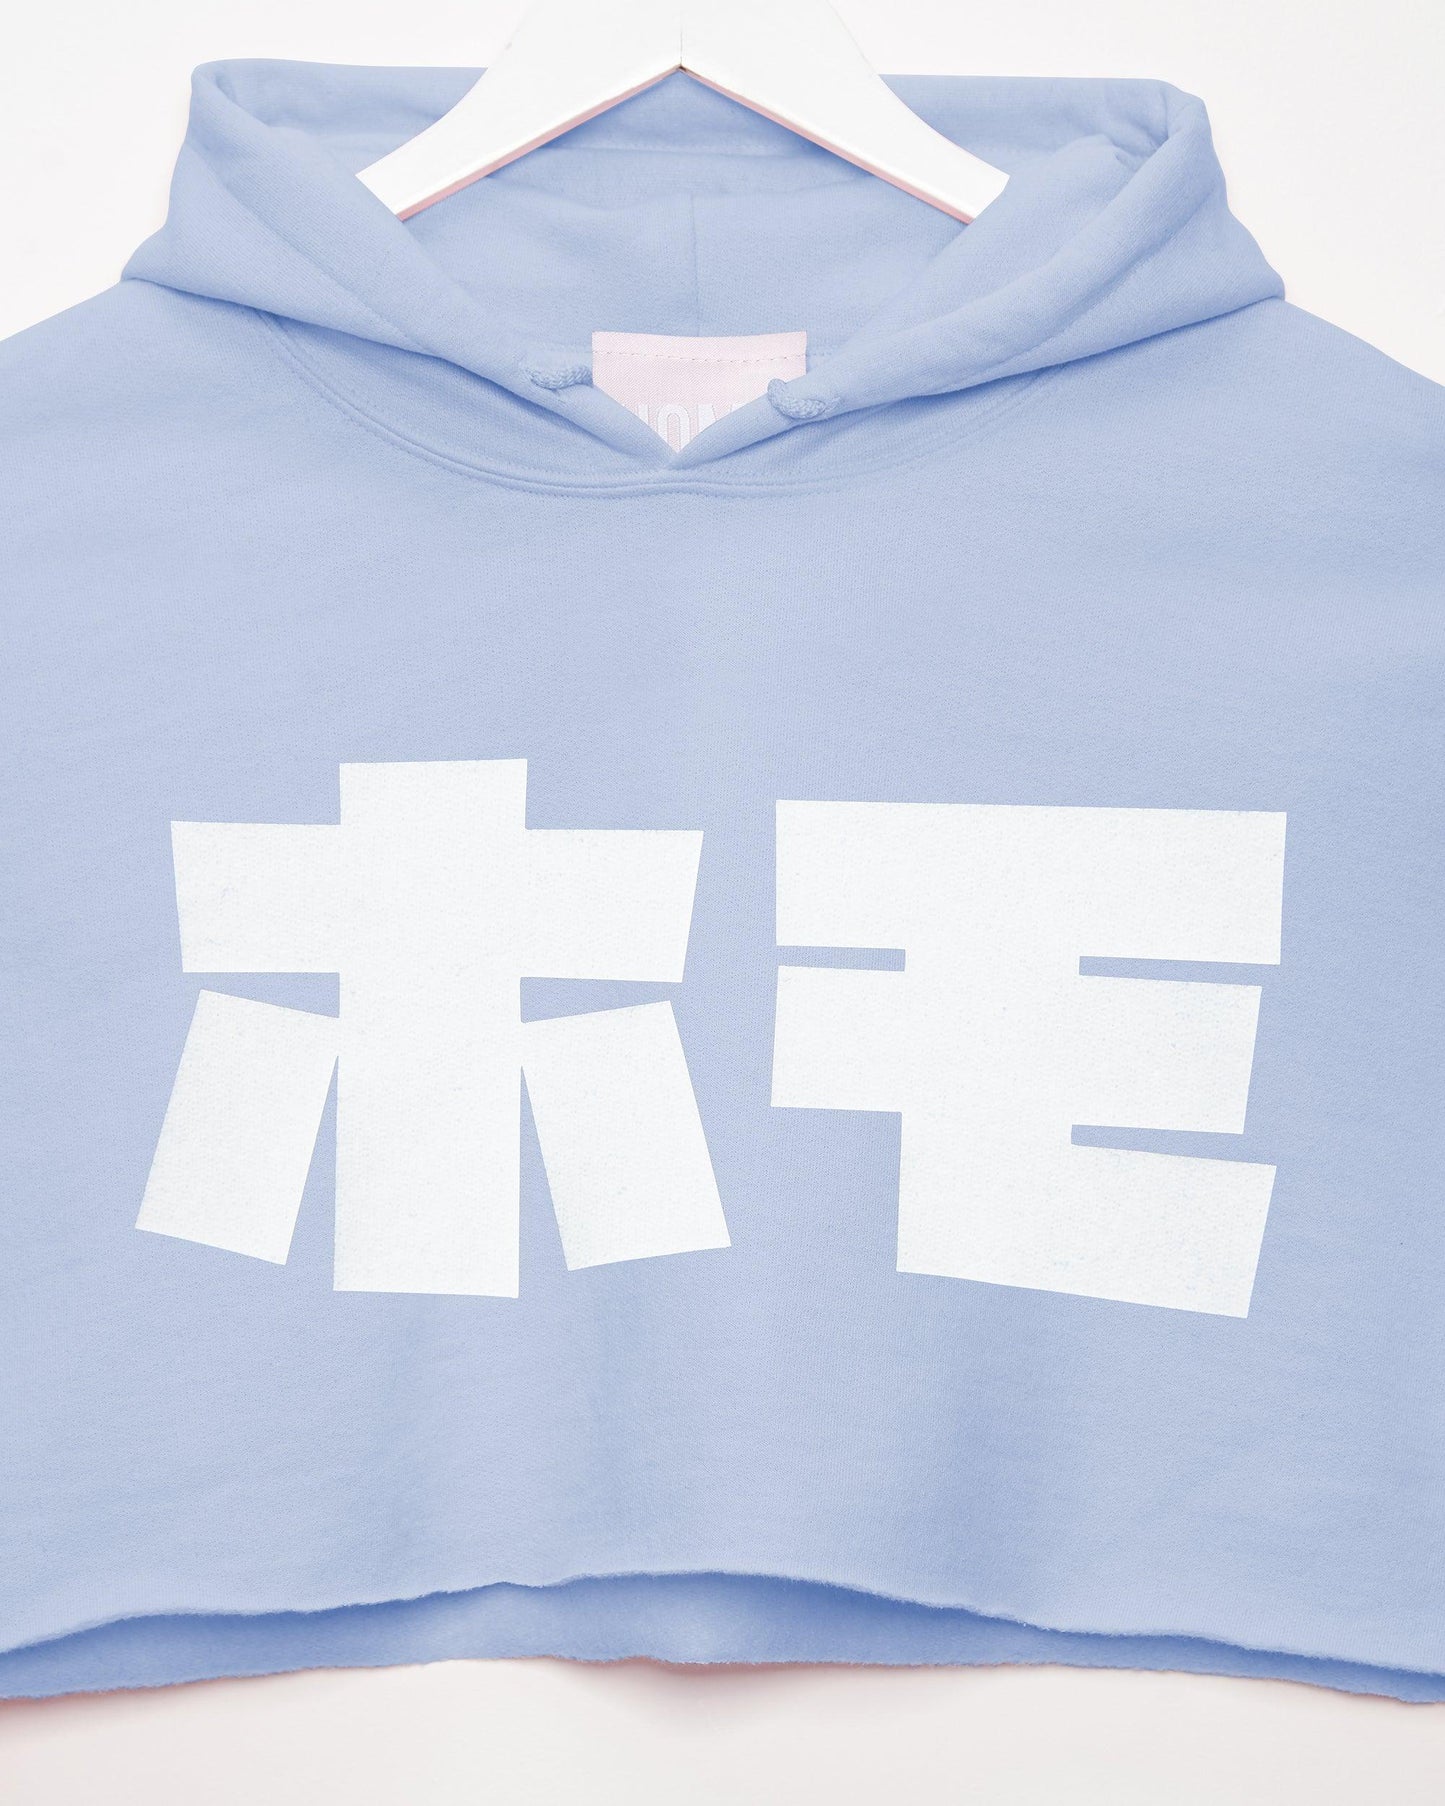 HOMO in Japanese, white on light blue - hoodie crop top.